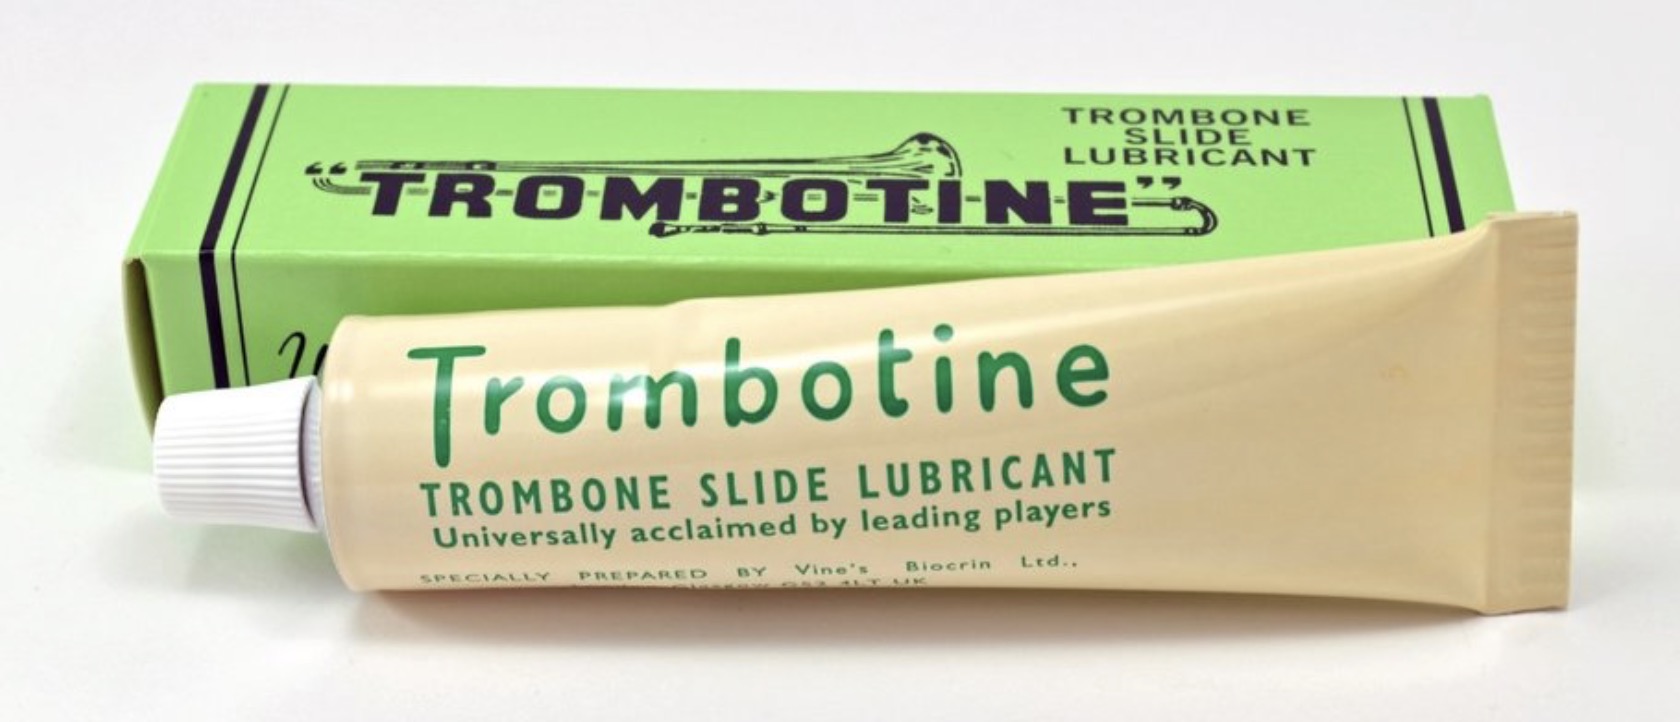 Trombotine slide greas Slide creame